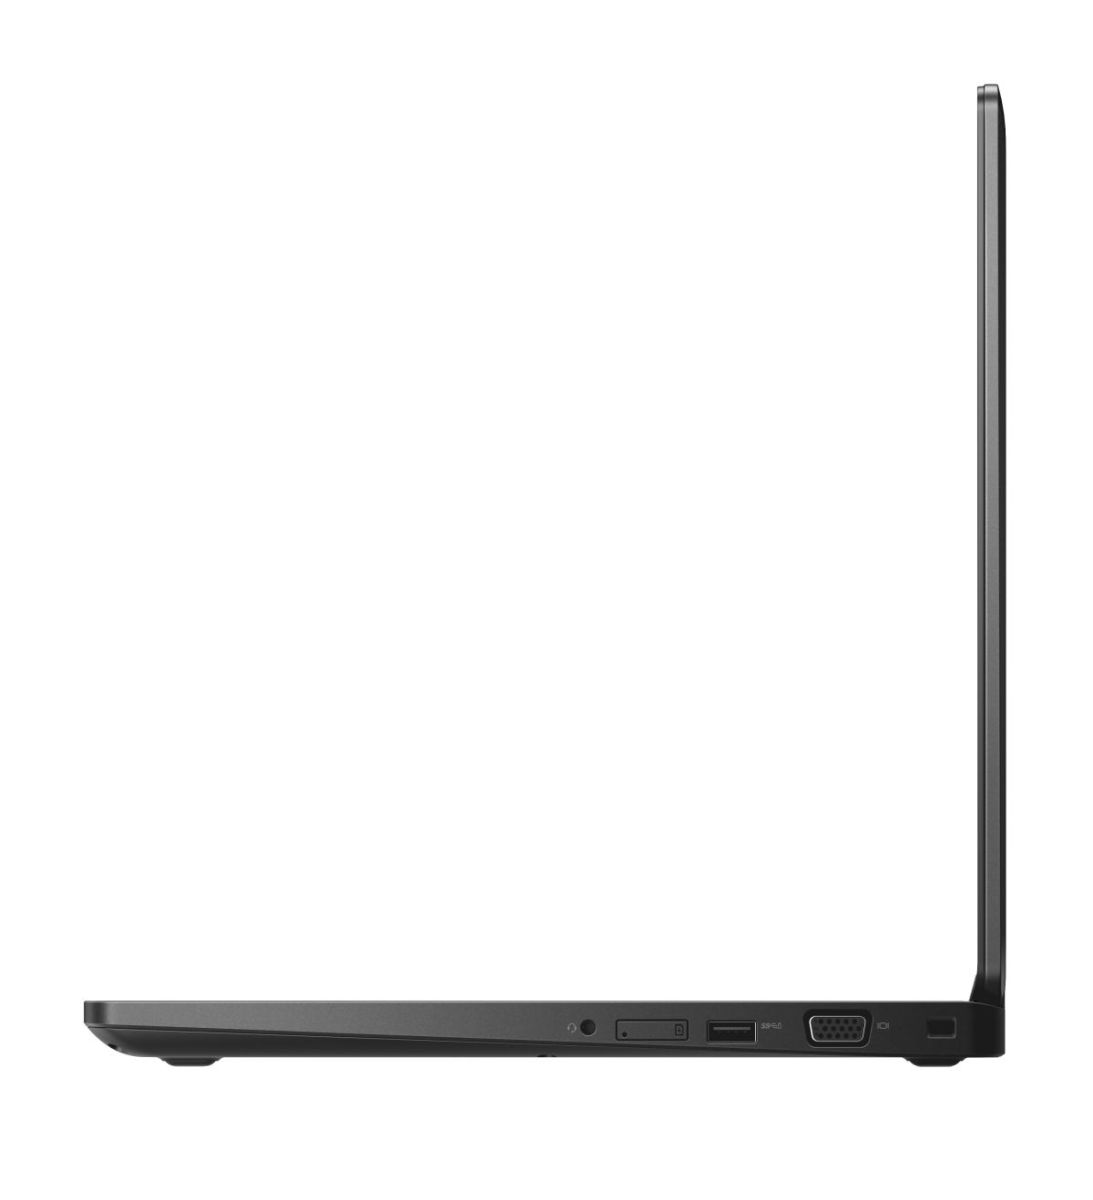 DELL Latitude 5590 - N051L559015EMEA laptop specifications